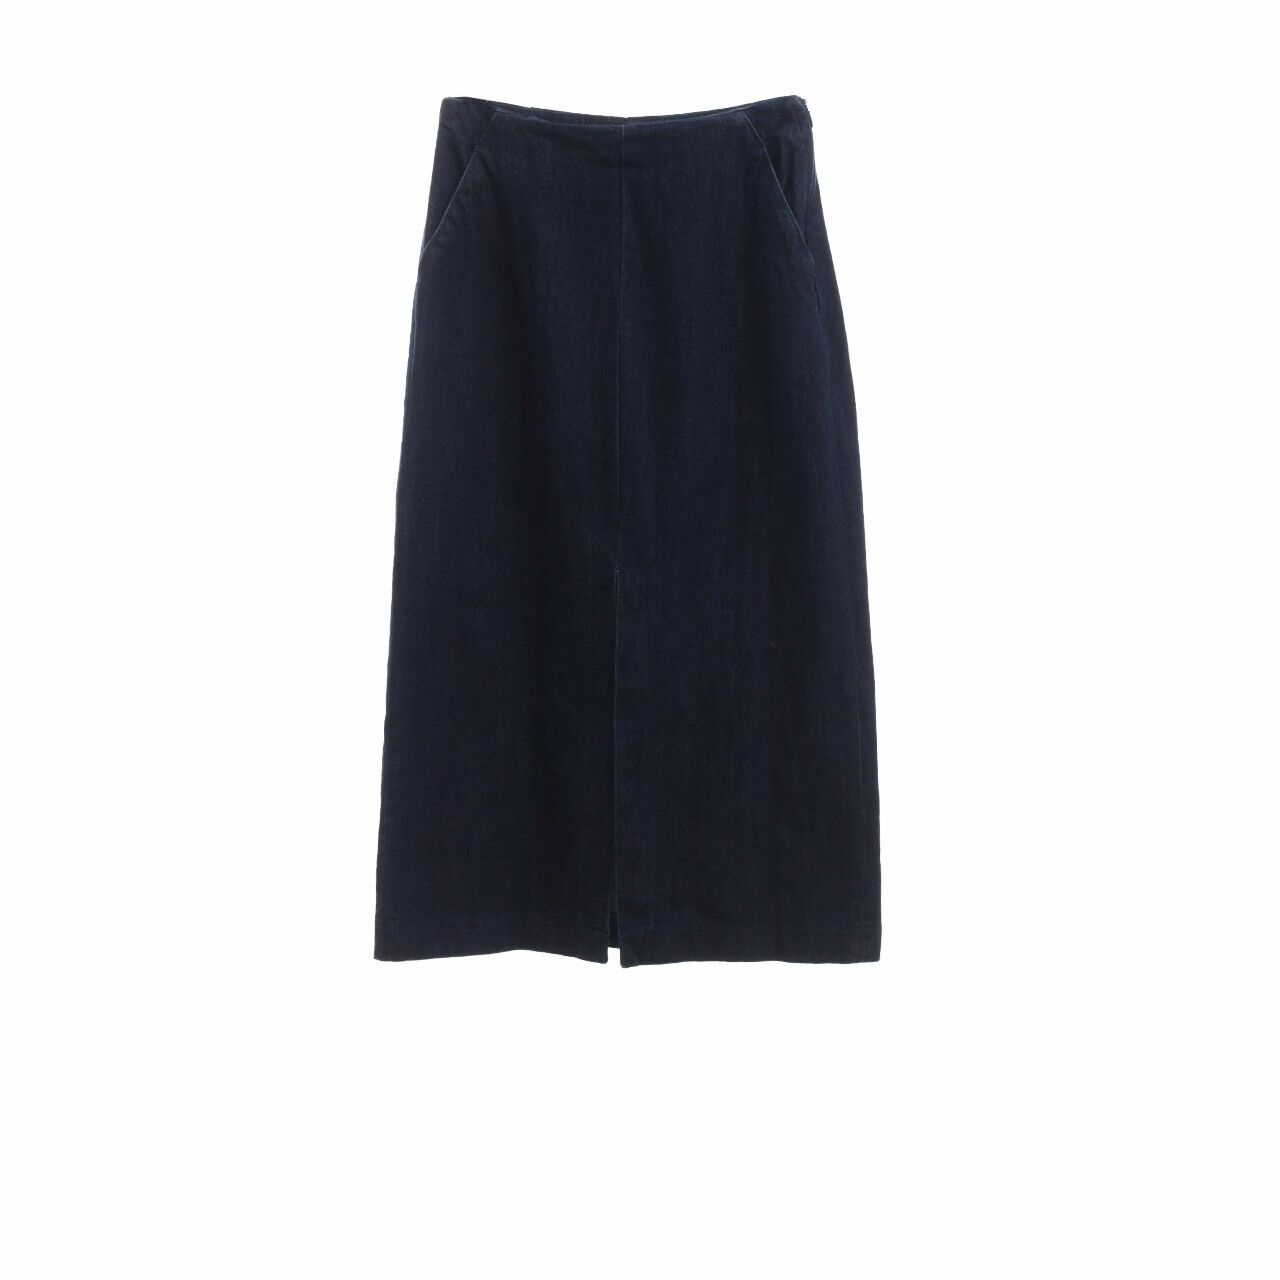 Zara Dark Blue Midi Skirt